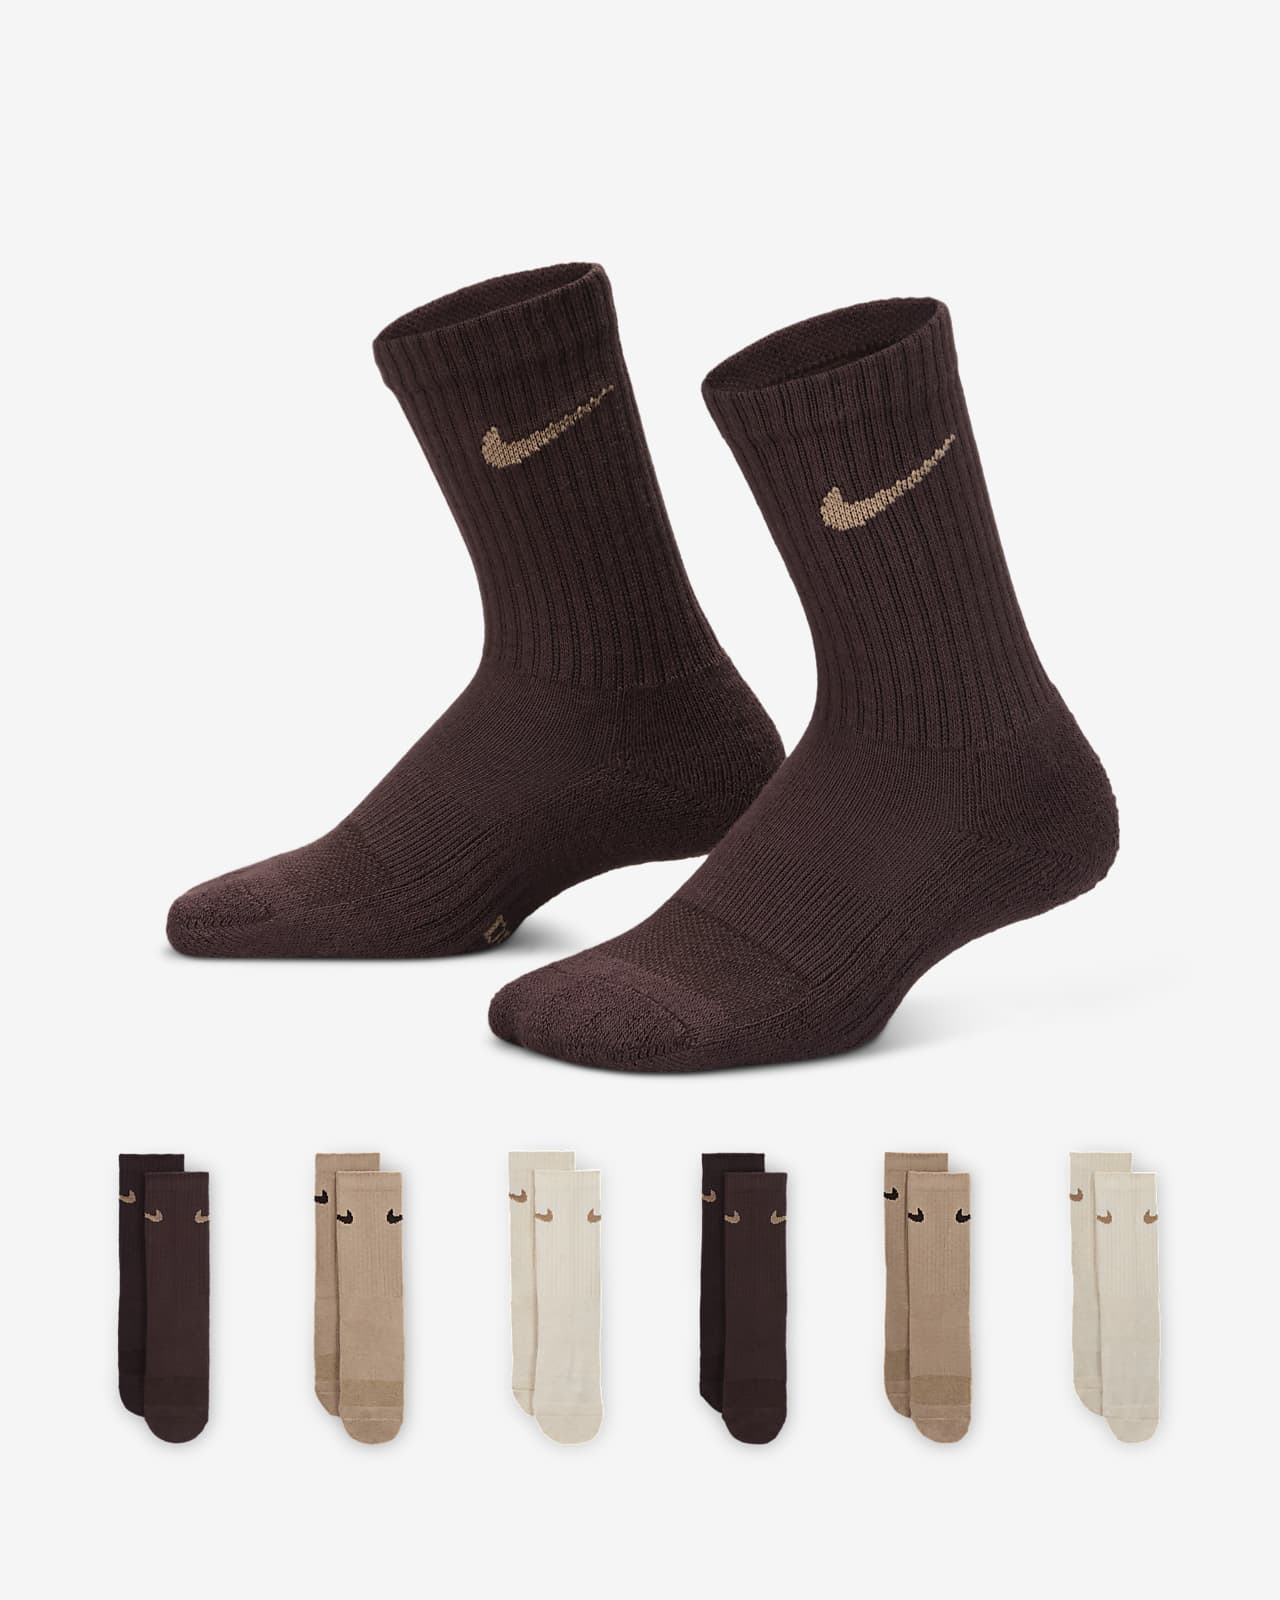 Calcetas para niños talla pequeña Nike Dri-FIT Performance Basics (6 pares)